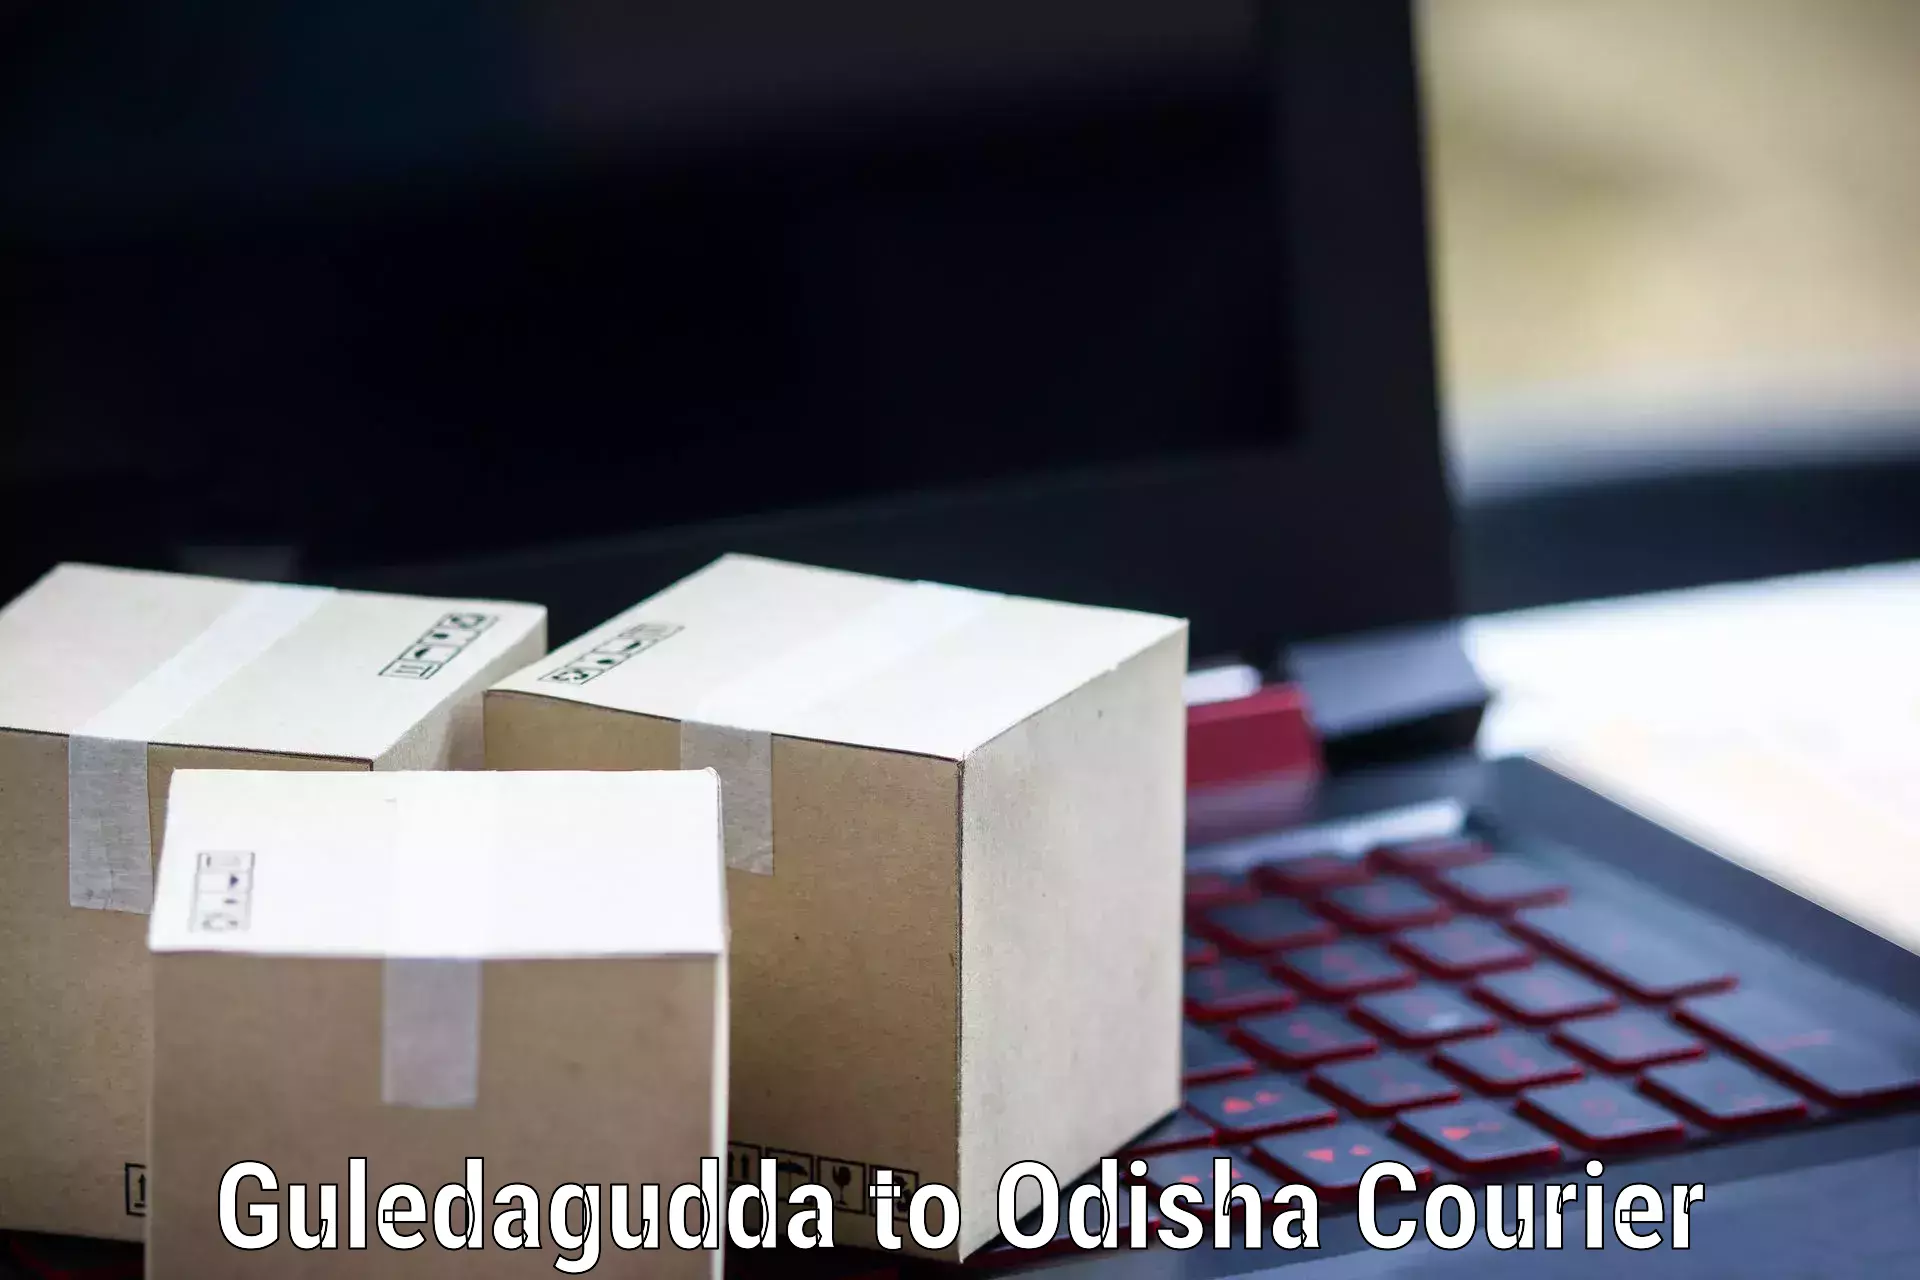 Express mail solutions in Guledagudda to Kodala